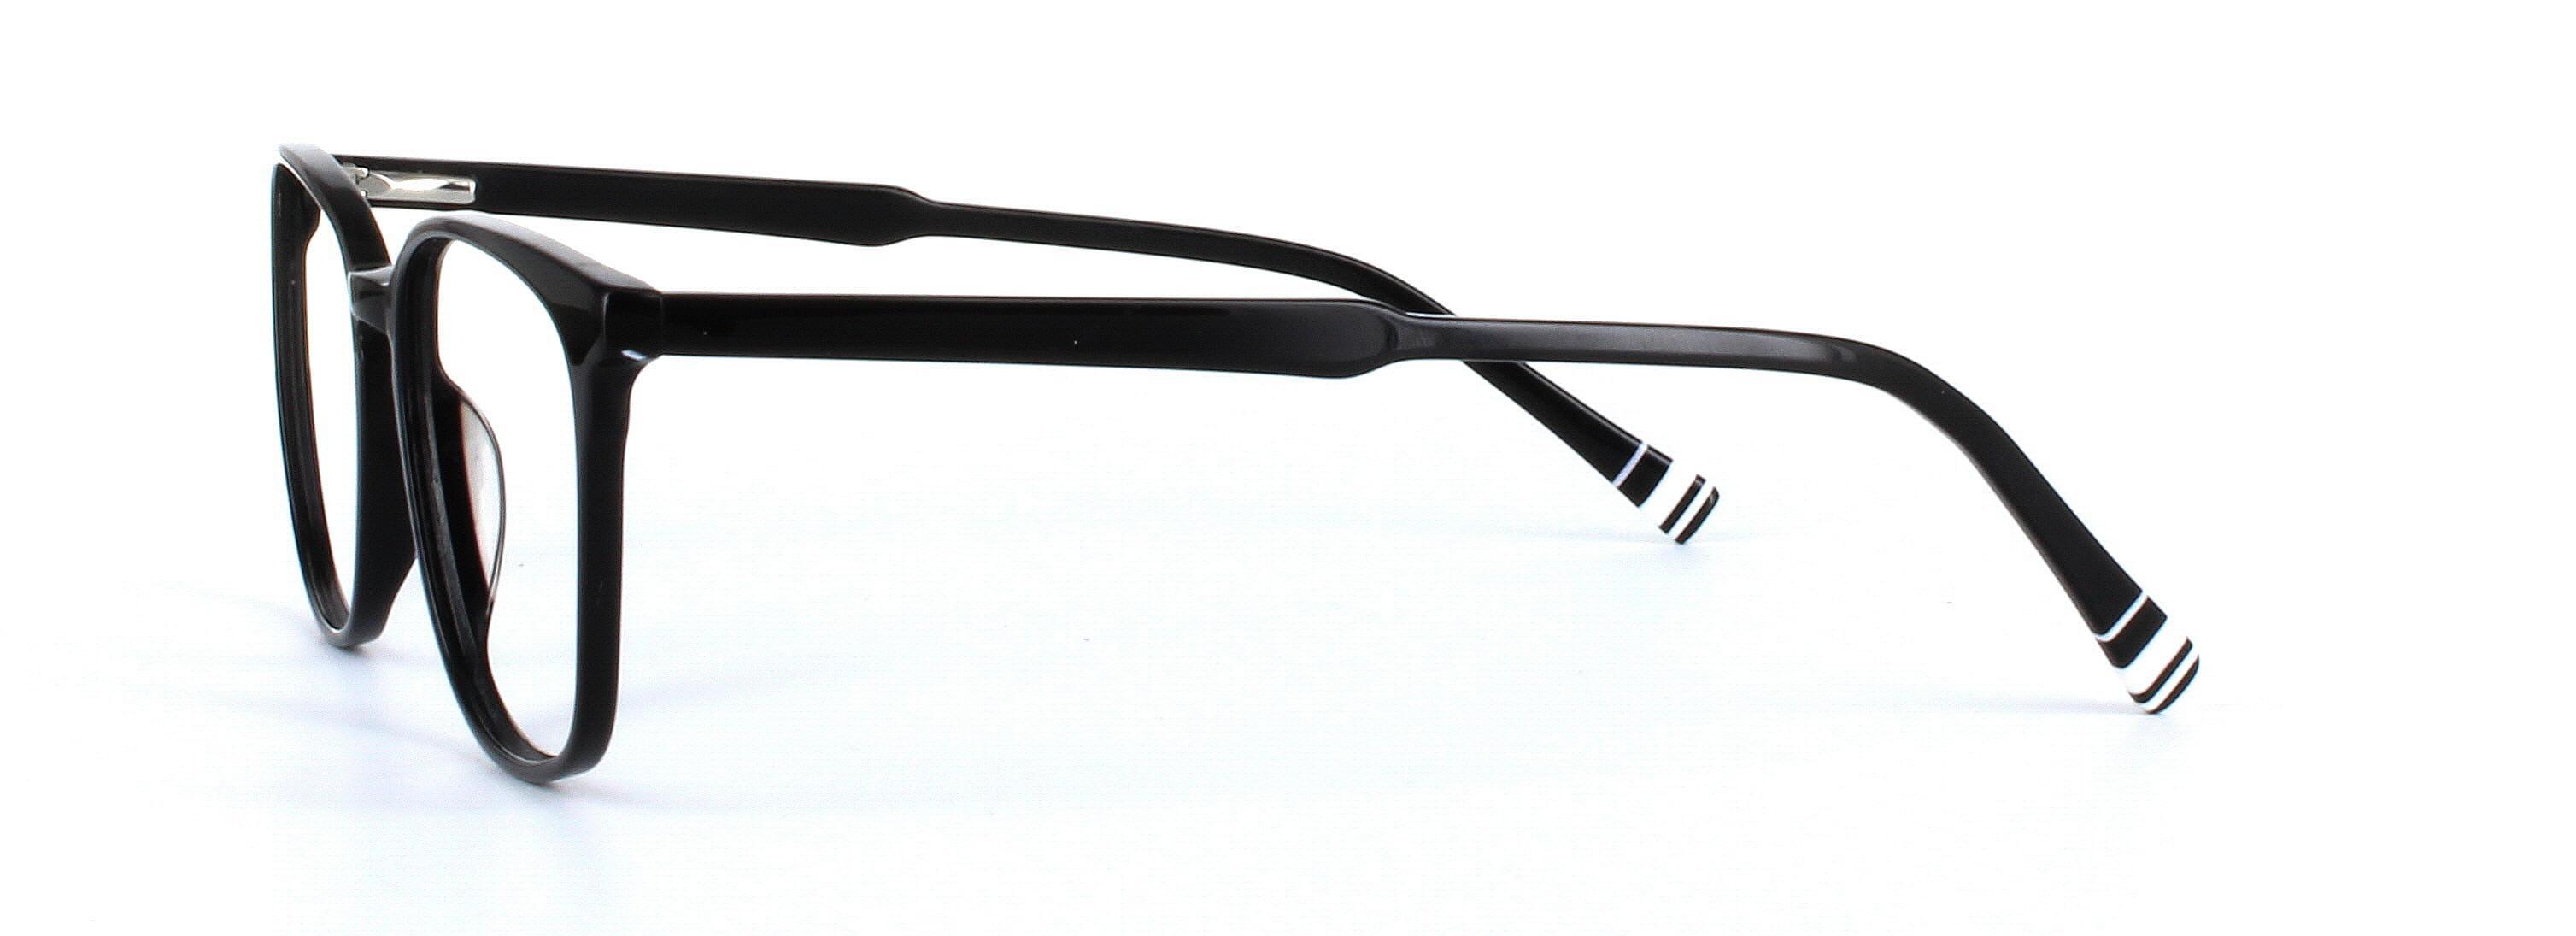 Astley Black Full Rim Round Acetate Glasses - Image View 2